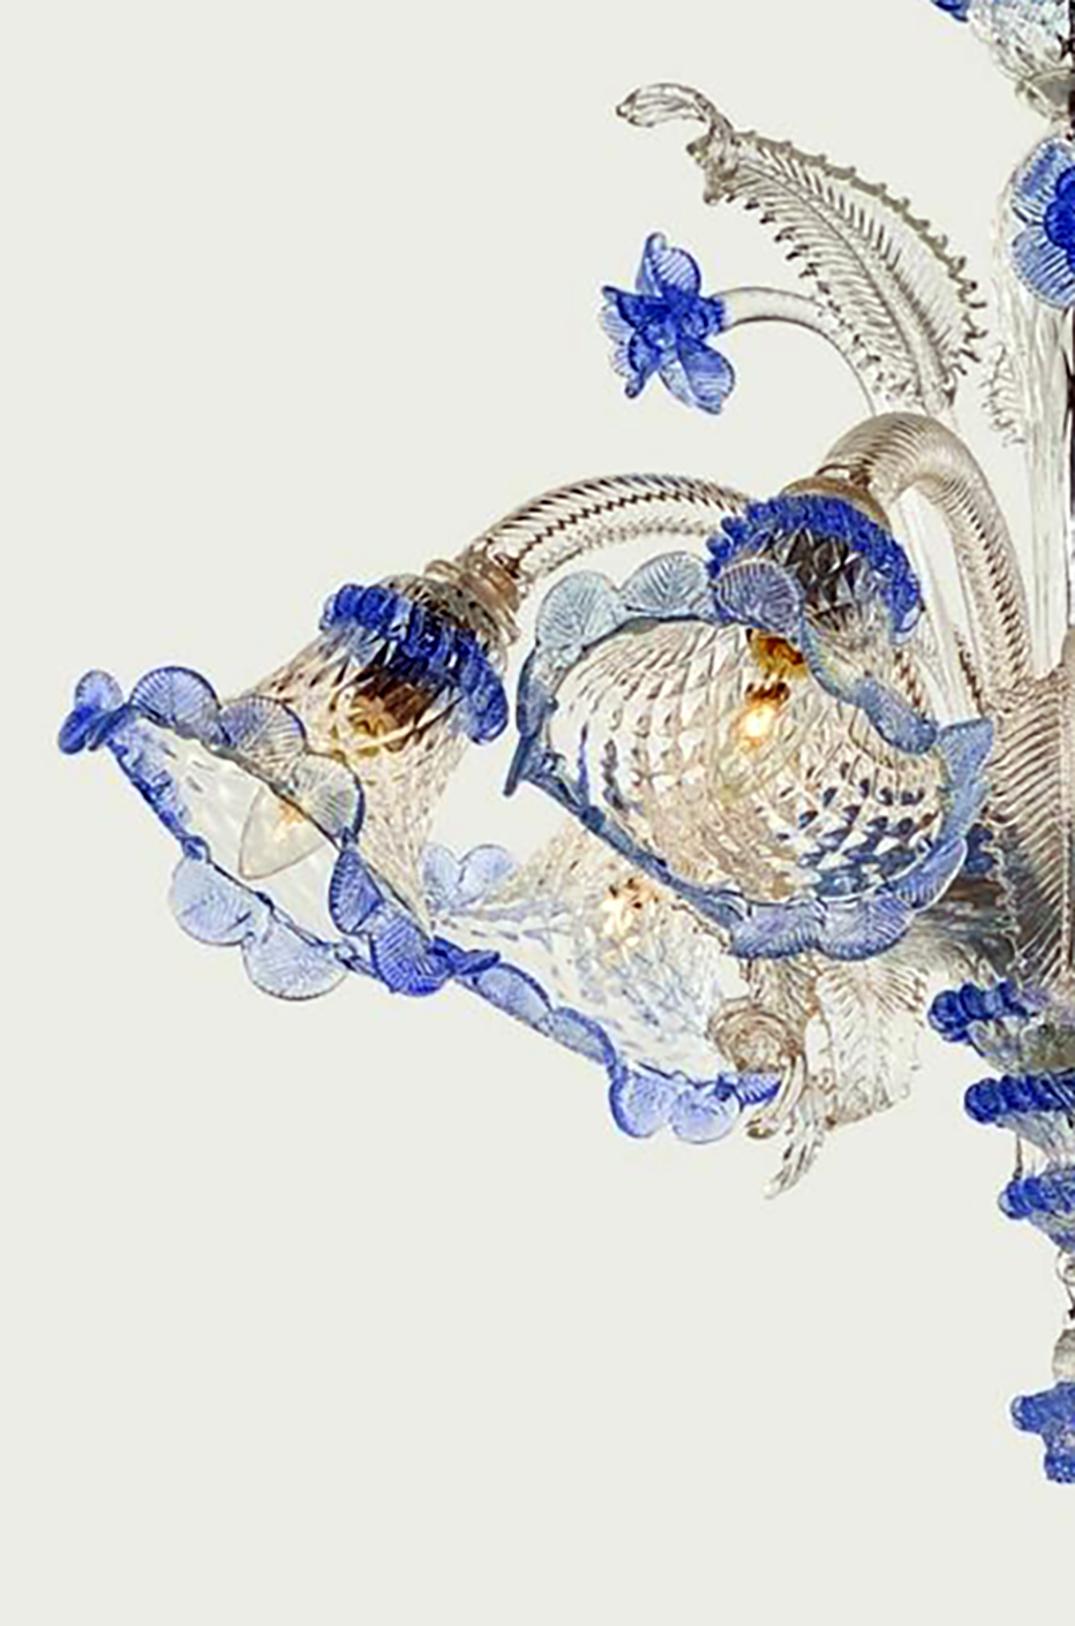 20th Century Modern Venetian Murano Glass Chandelier 